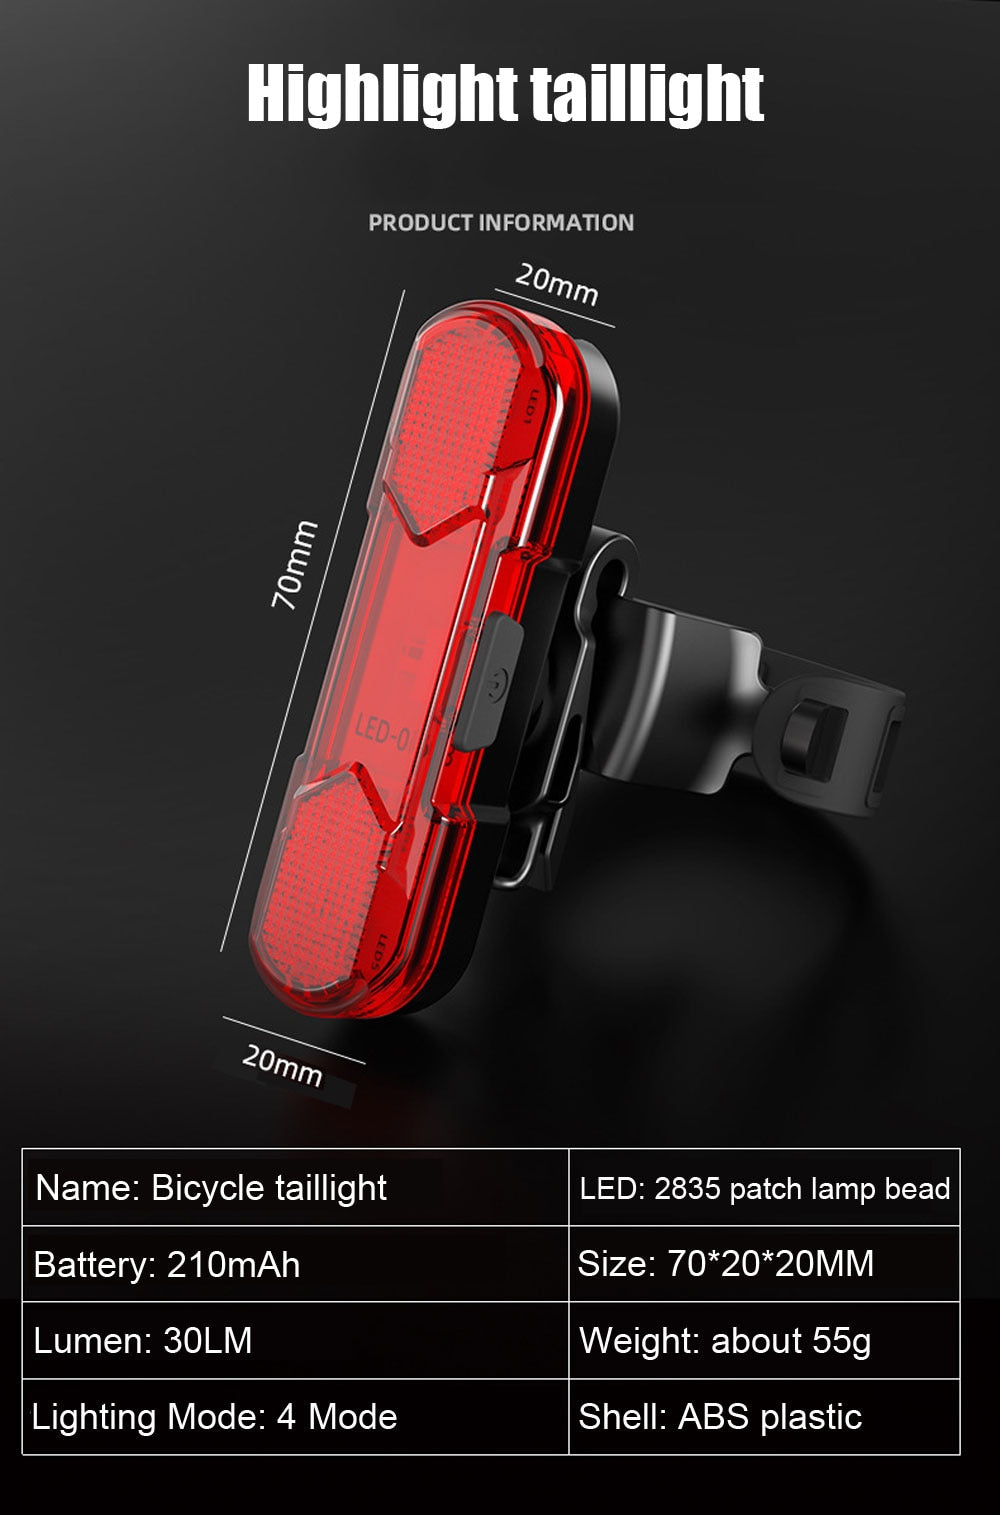 NEWBOLER Bicycle Light Front 6000Lumen Bike Light 8000mAh Waterproof  Flashlight USB Charging MTB Road Cycling Lamp Accessories